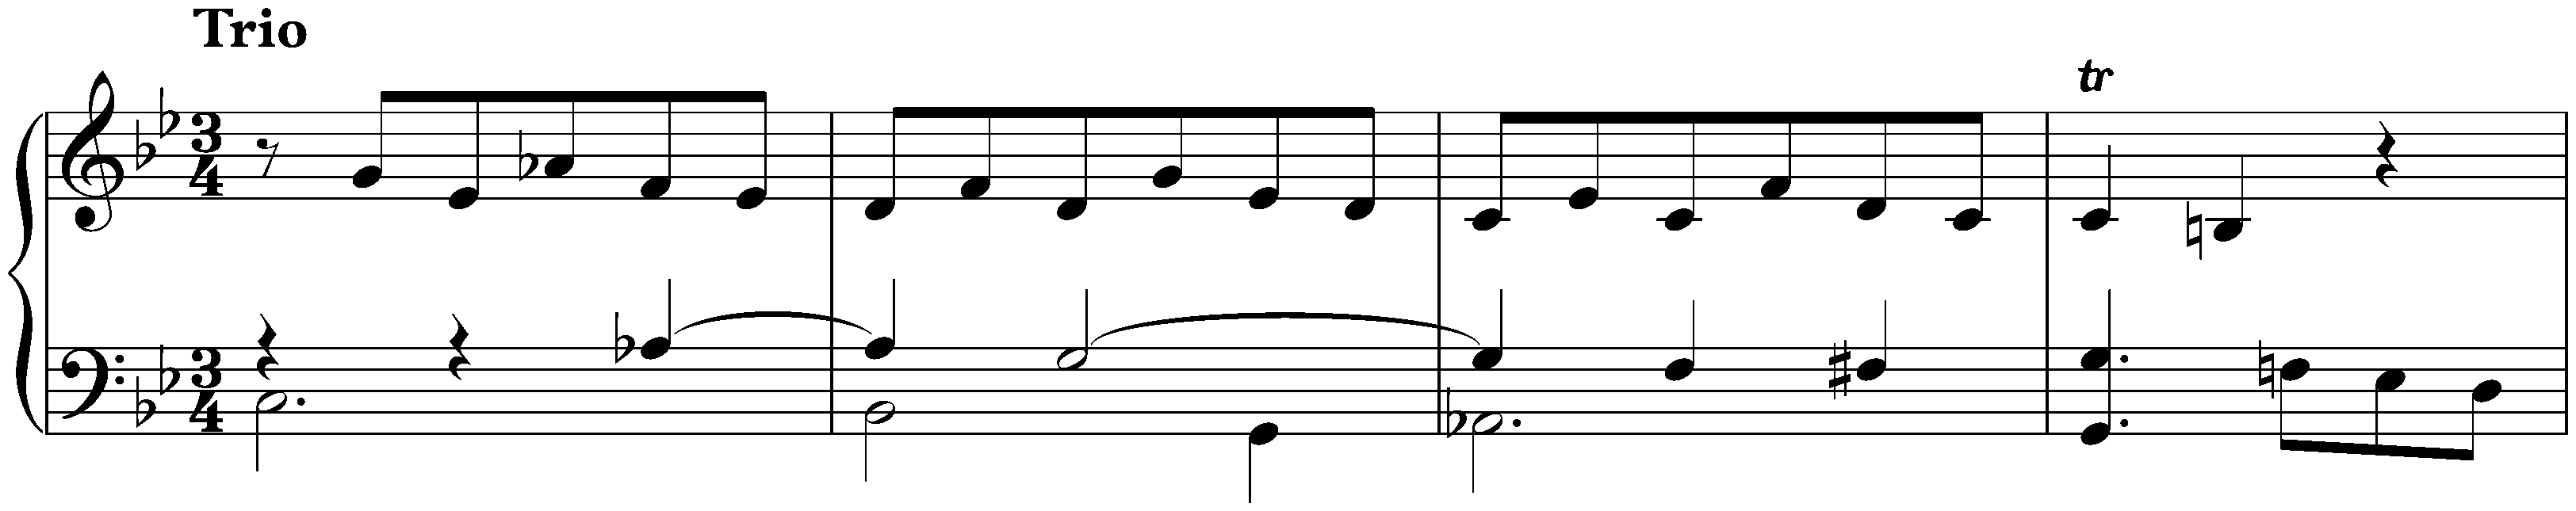 Sonata in C major, Hob. XVI:10; 2. Menuet – Trio